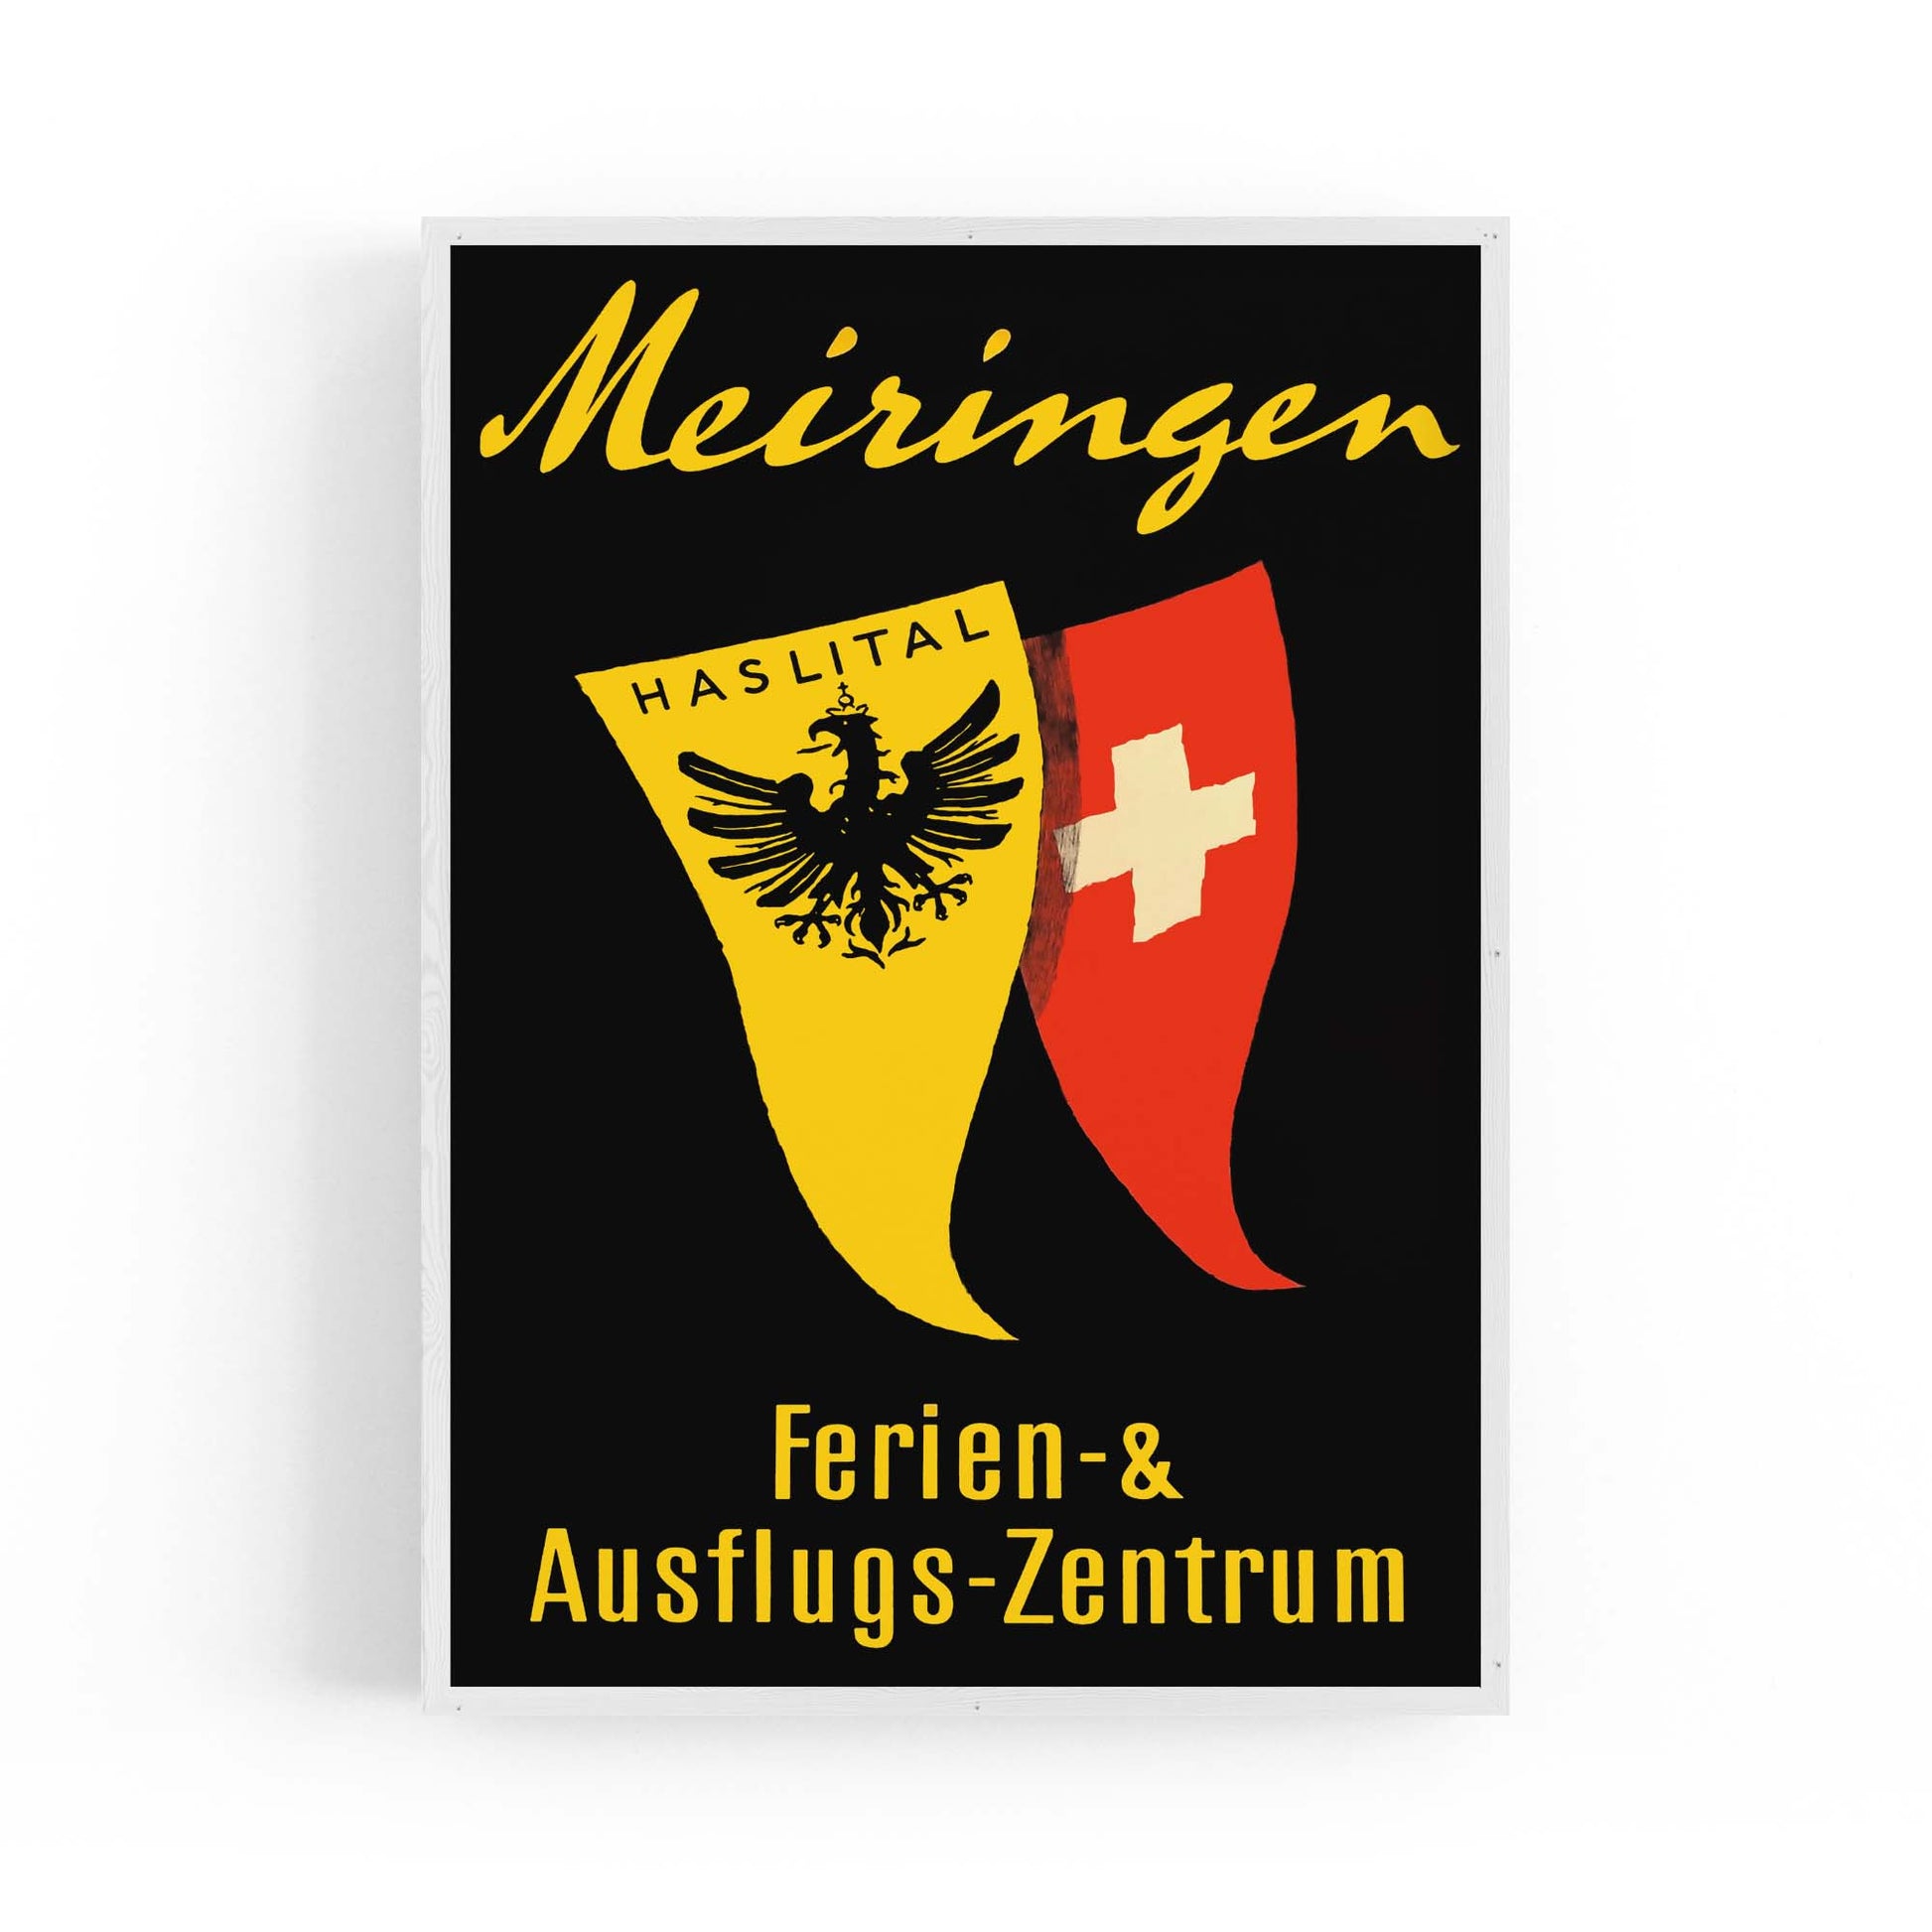 Meiringen Switzerland Vintage Travel Advert Wall Art - The Affordable Art Company